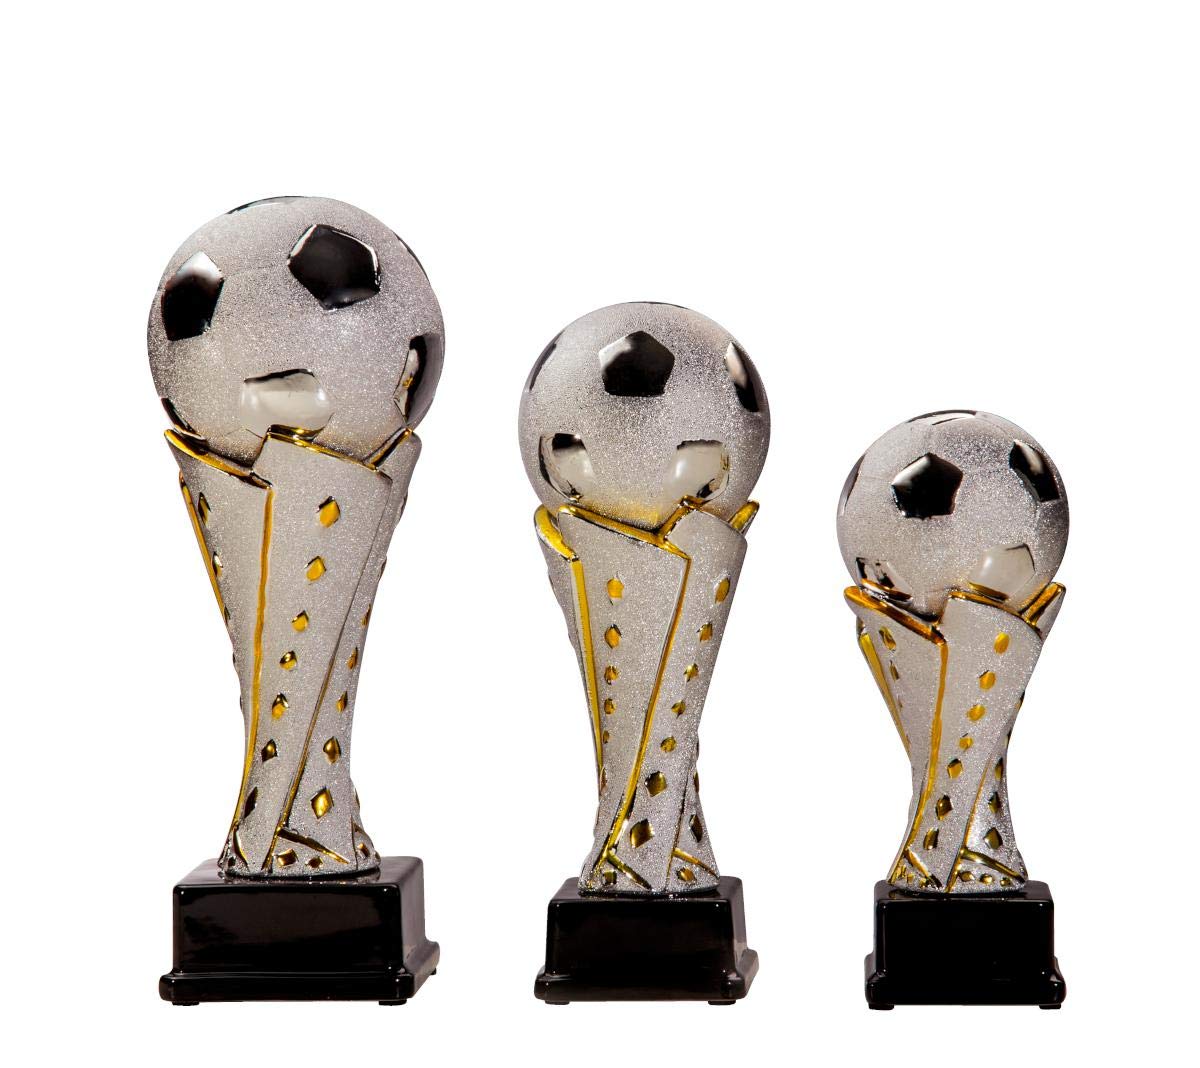 eberin · Fussball-Pokal, Keramik-Fußball Trophäe, Silber Gold, mit Wunschtext, Größe 22 cm